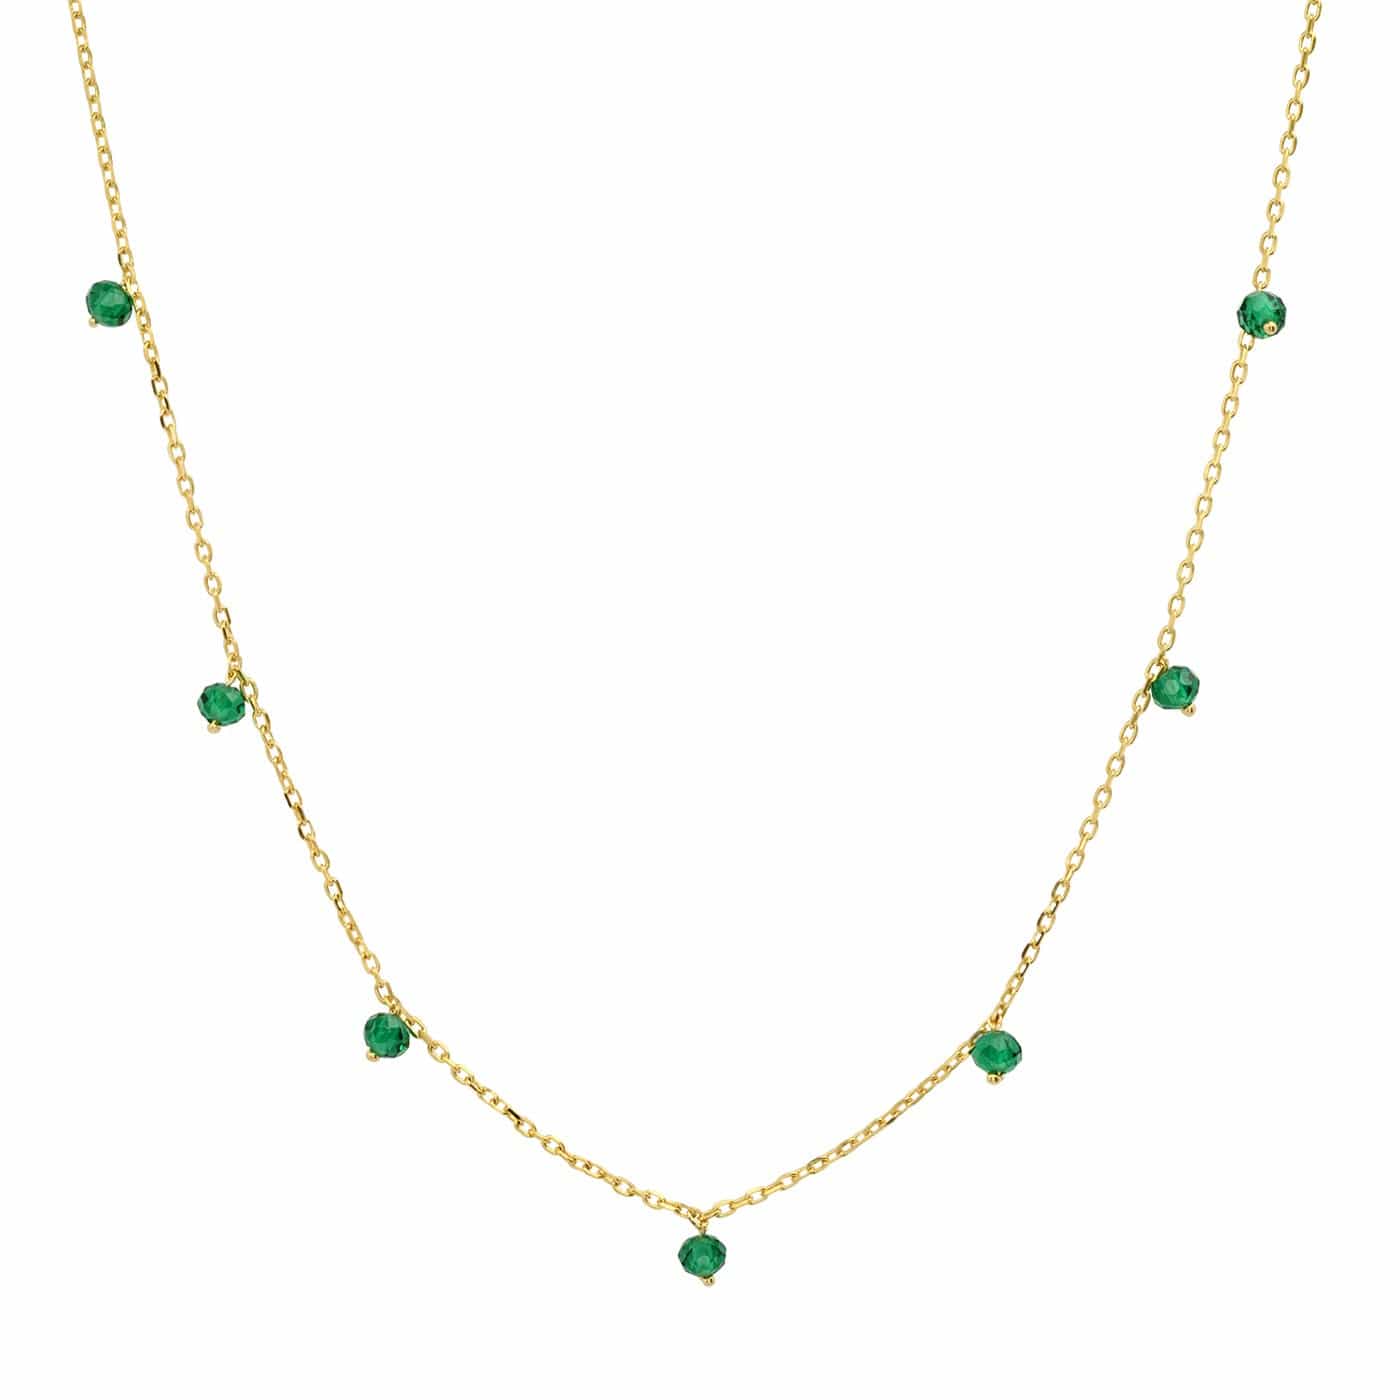 TAI JEWELRY Necklace Emerald Green CZ Station Necklace